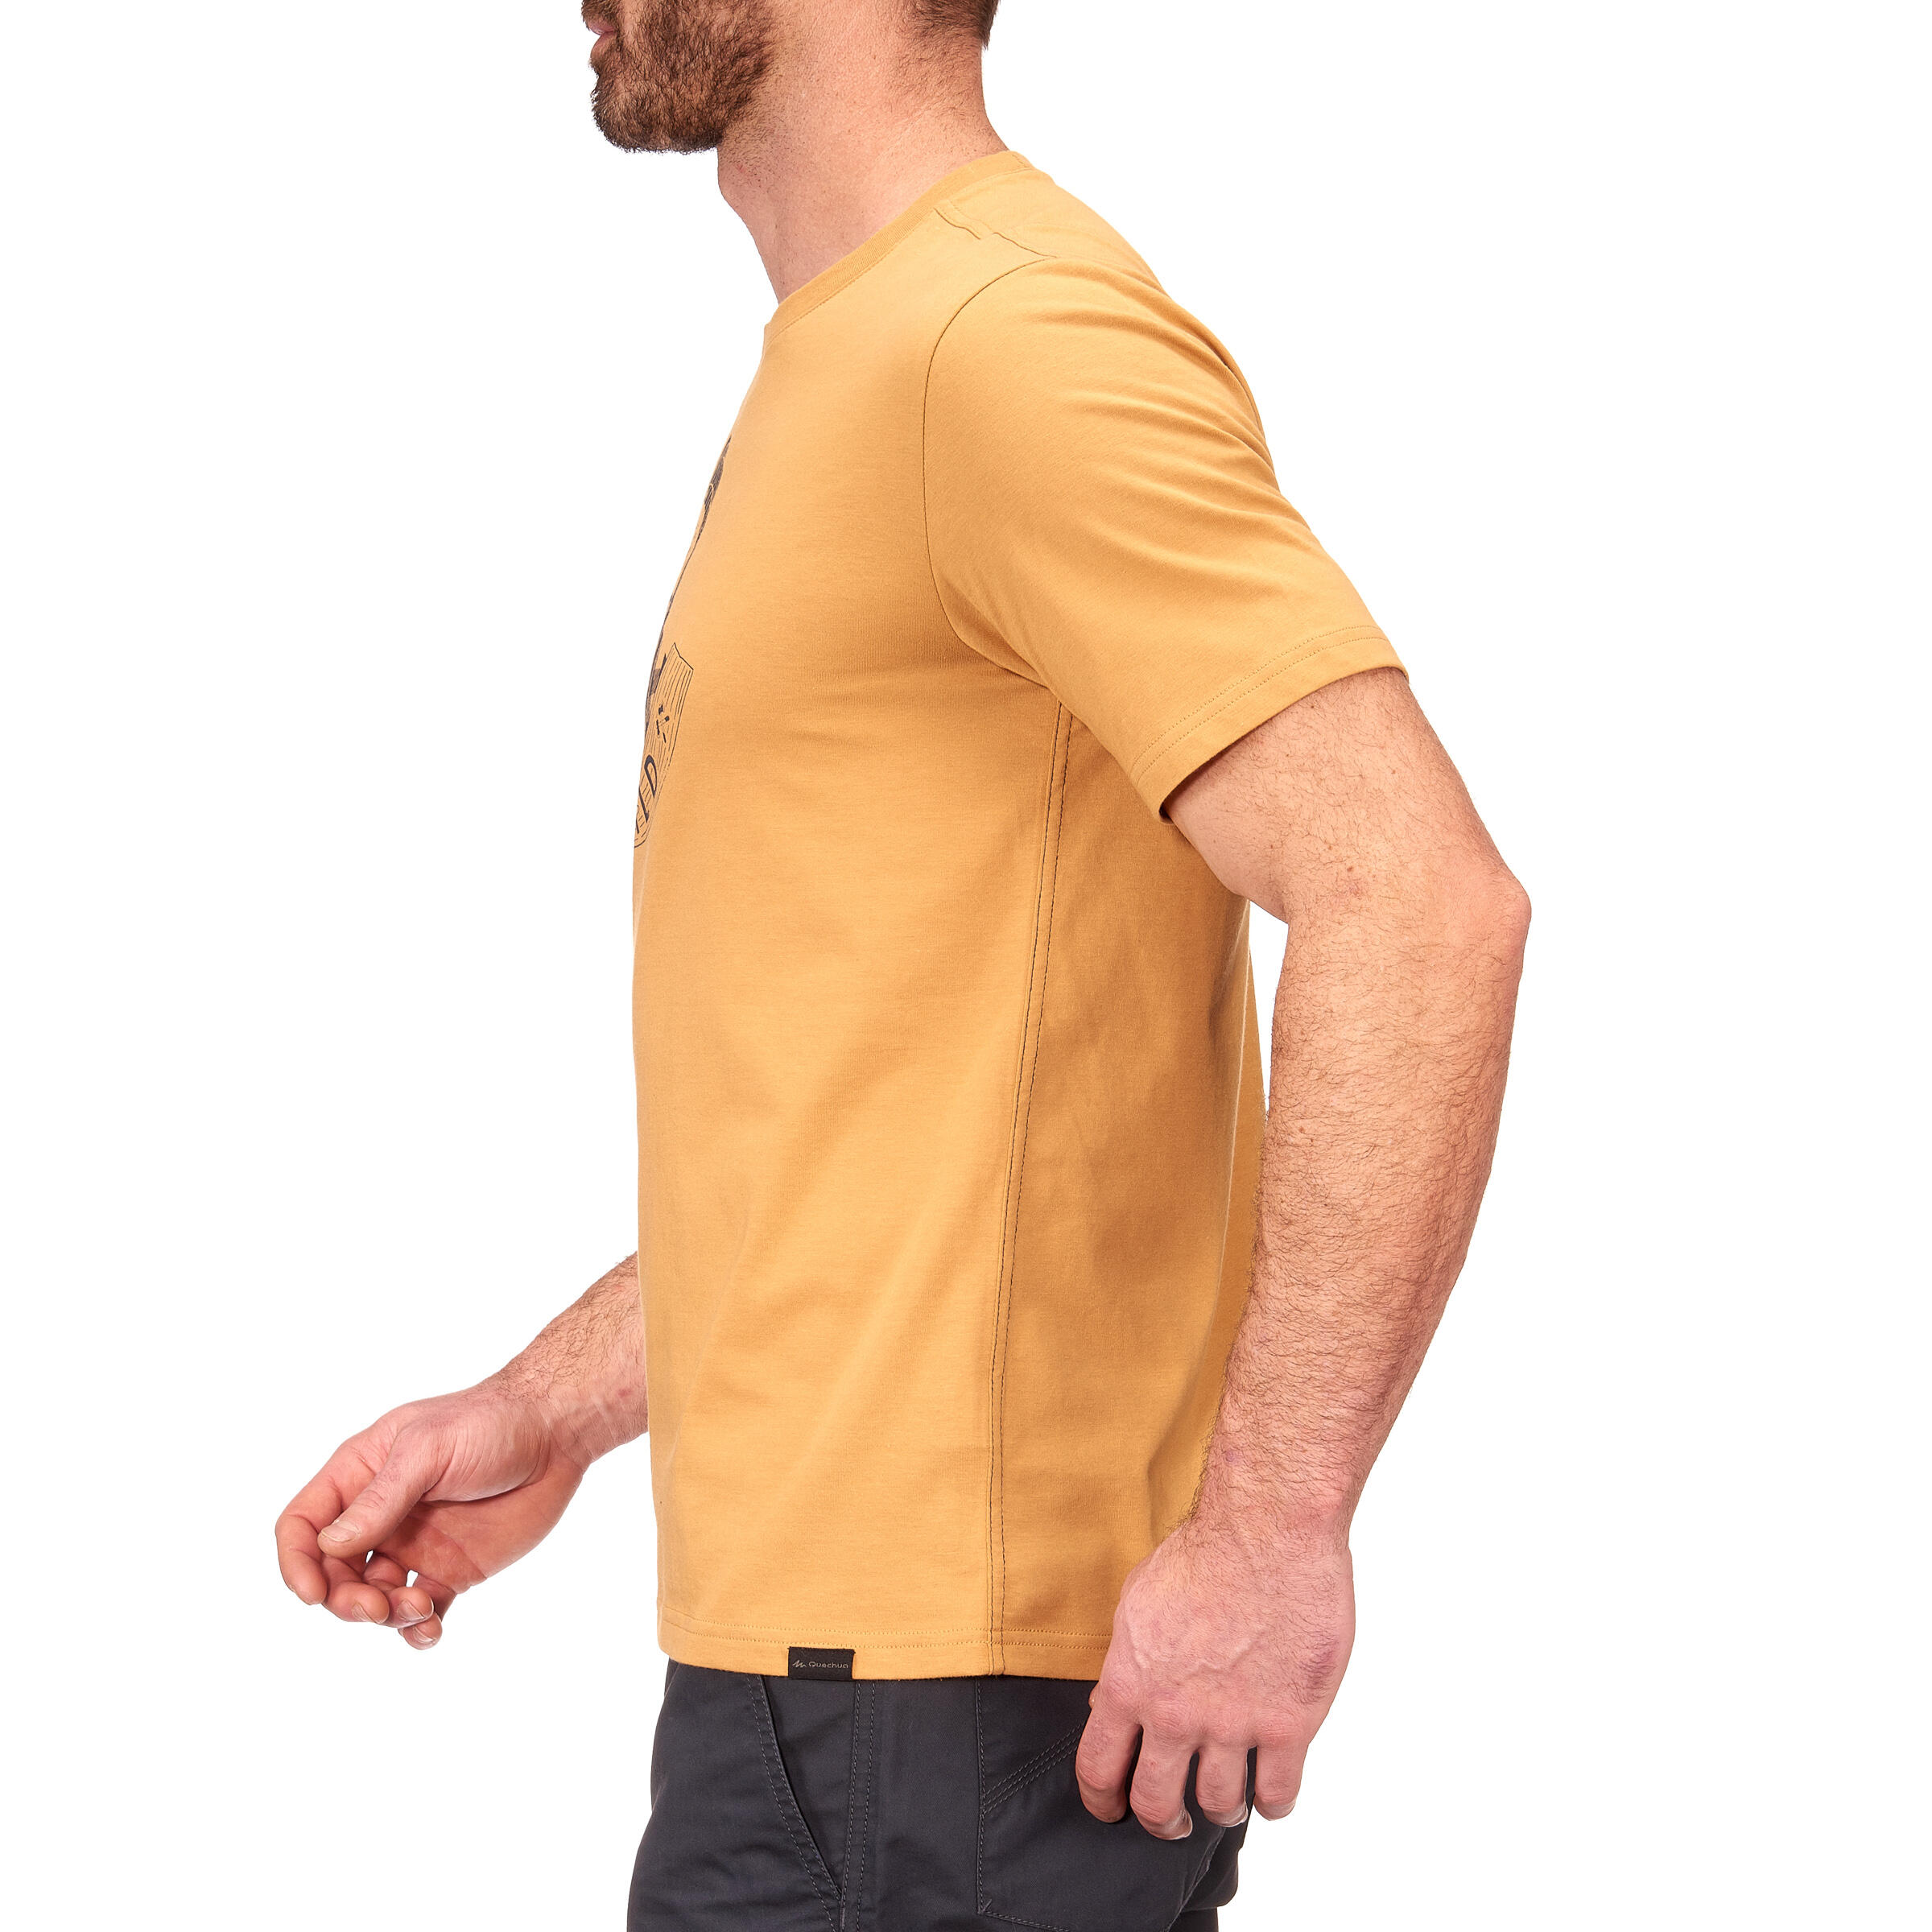 TechTIL 100 Men's Short-Sleeved Hiking T-Shirt - Ochre 4/9